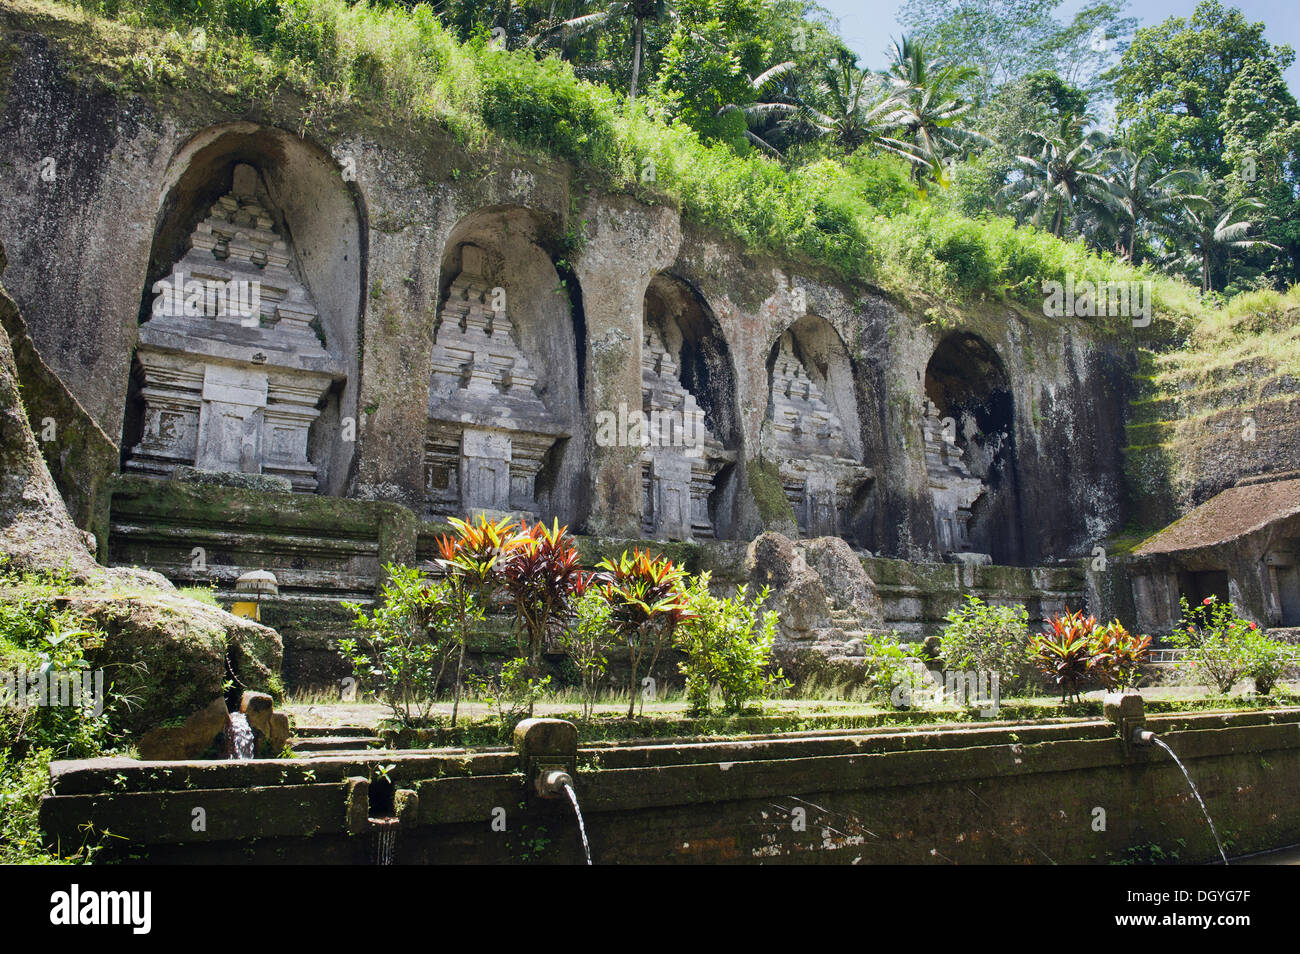 Royal tombs of Gunung Kawi, stone monuments carved into the rock wall, Gunung Kawi, Tampaksiring, Bali, Indonesia Stock Photo